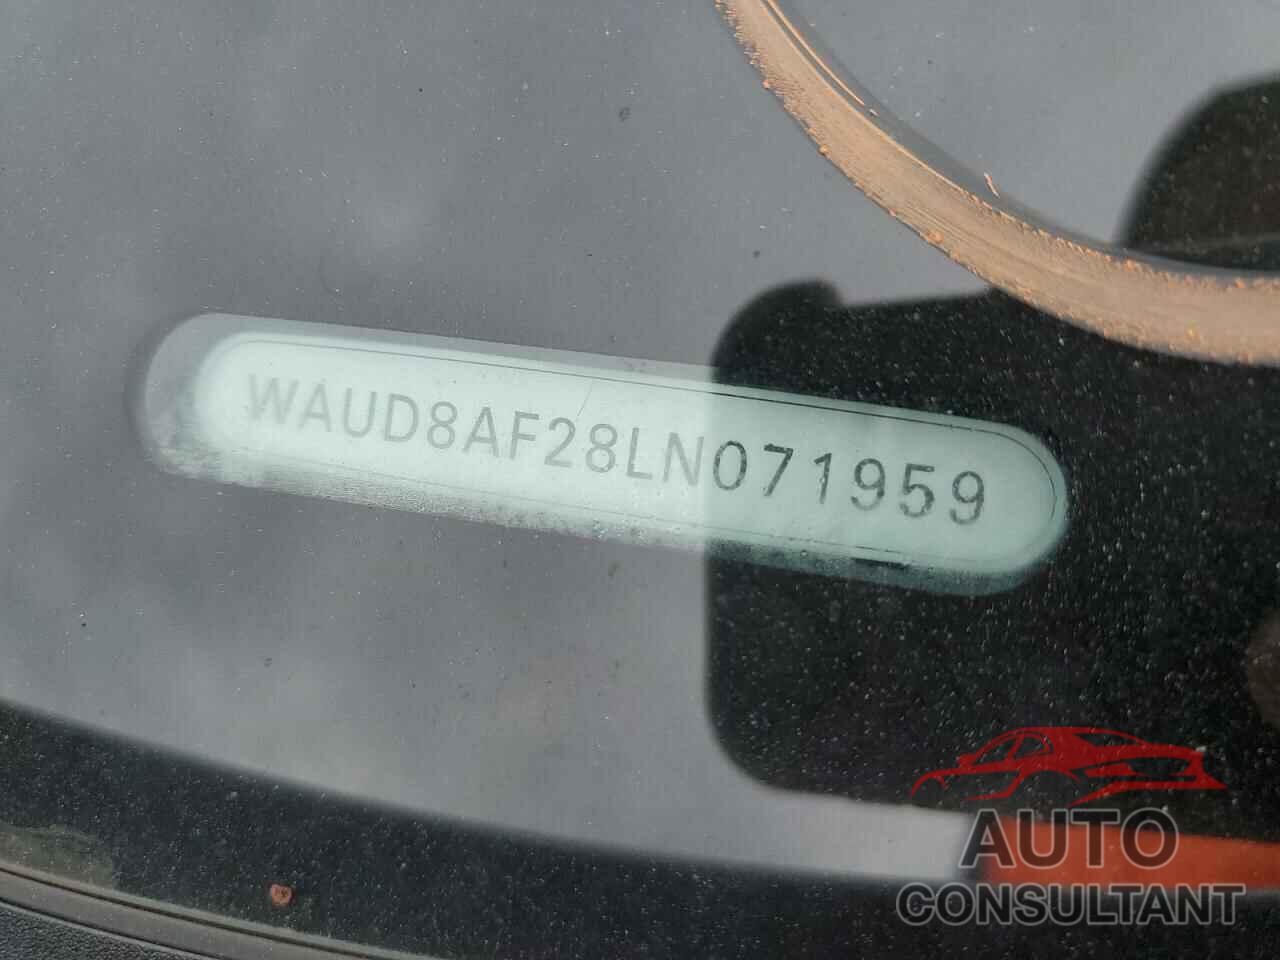 AUDI A6 2020 - WAUD8AF28LN071959